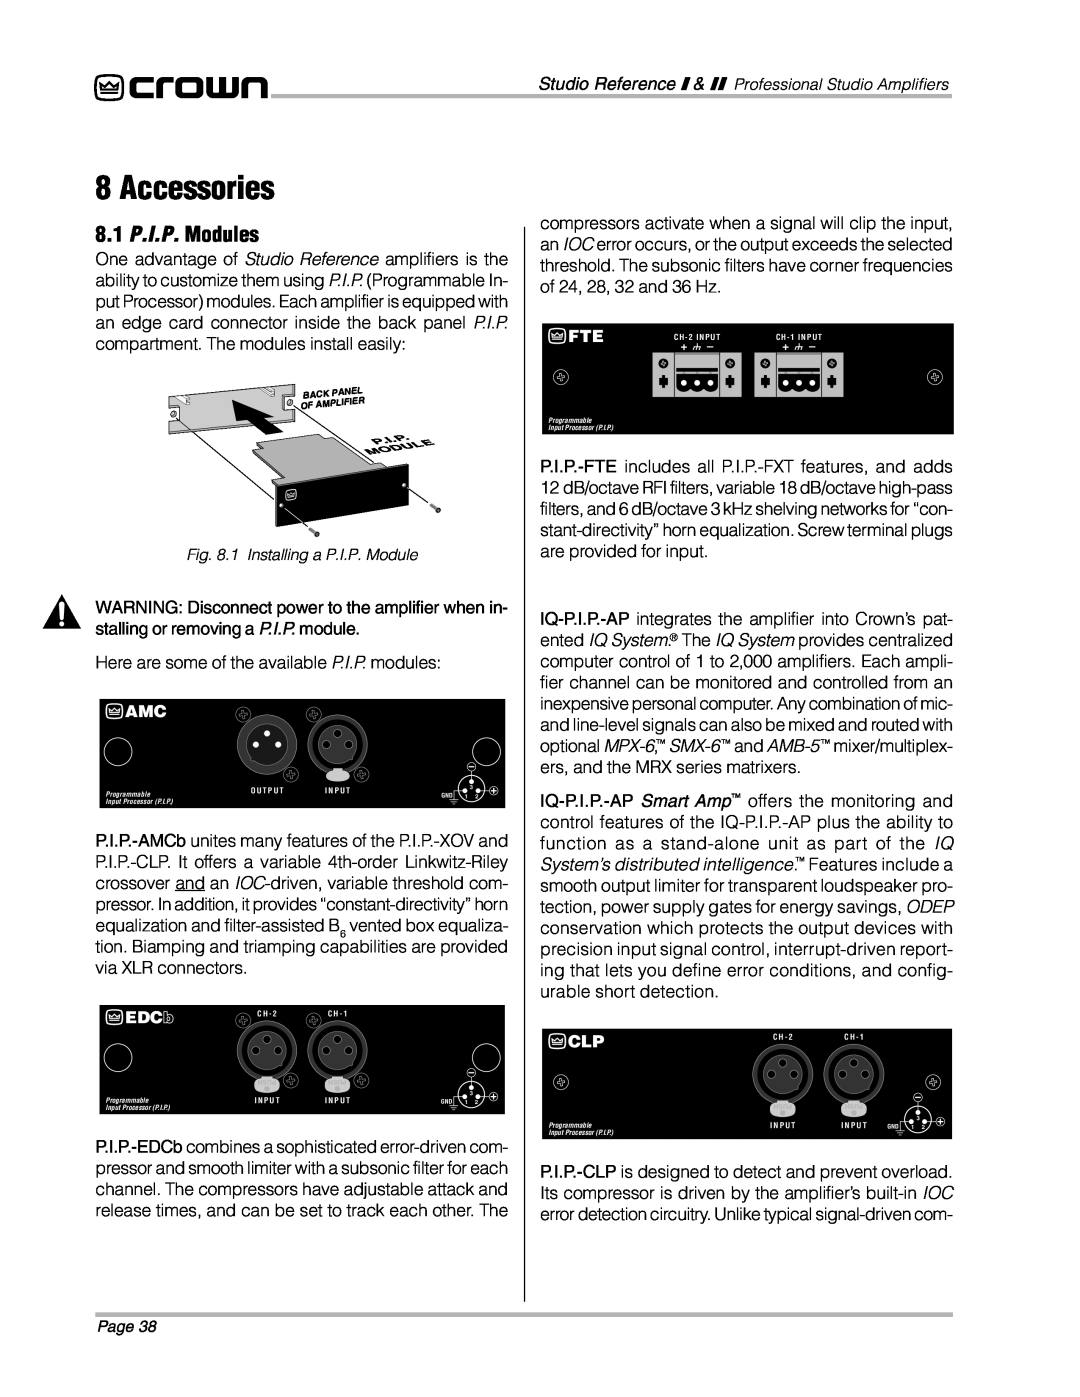 Crown Audio STUDIO AMPLIFIER owner manual Accessories, 8.1 P.I.P. Modules, EDCb 